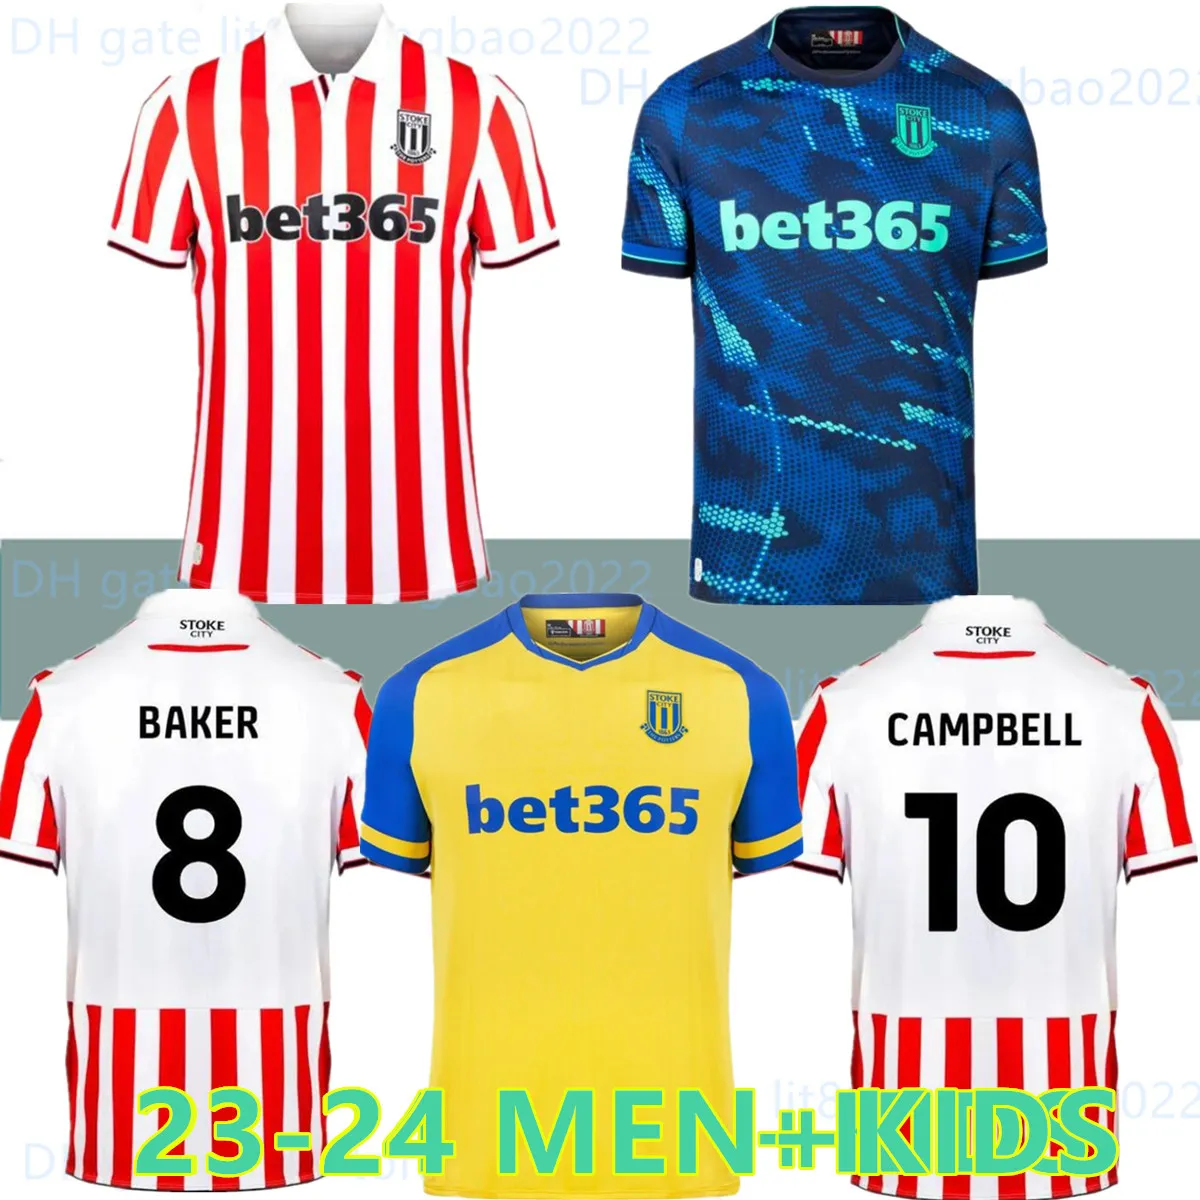 23 24 Stoke City Mikel Campbell Soccer Jerseys Smith Powell Powell Brown Clucas Home Kits 2023 2024 Lewis Baker Men Men Kids Kids Tops Tops 999